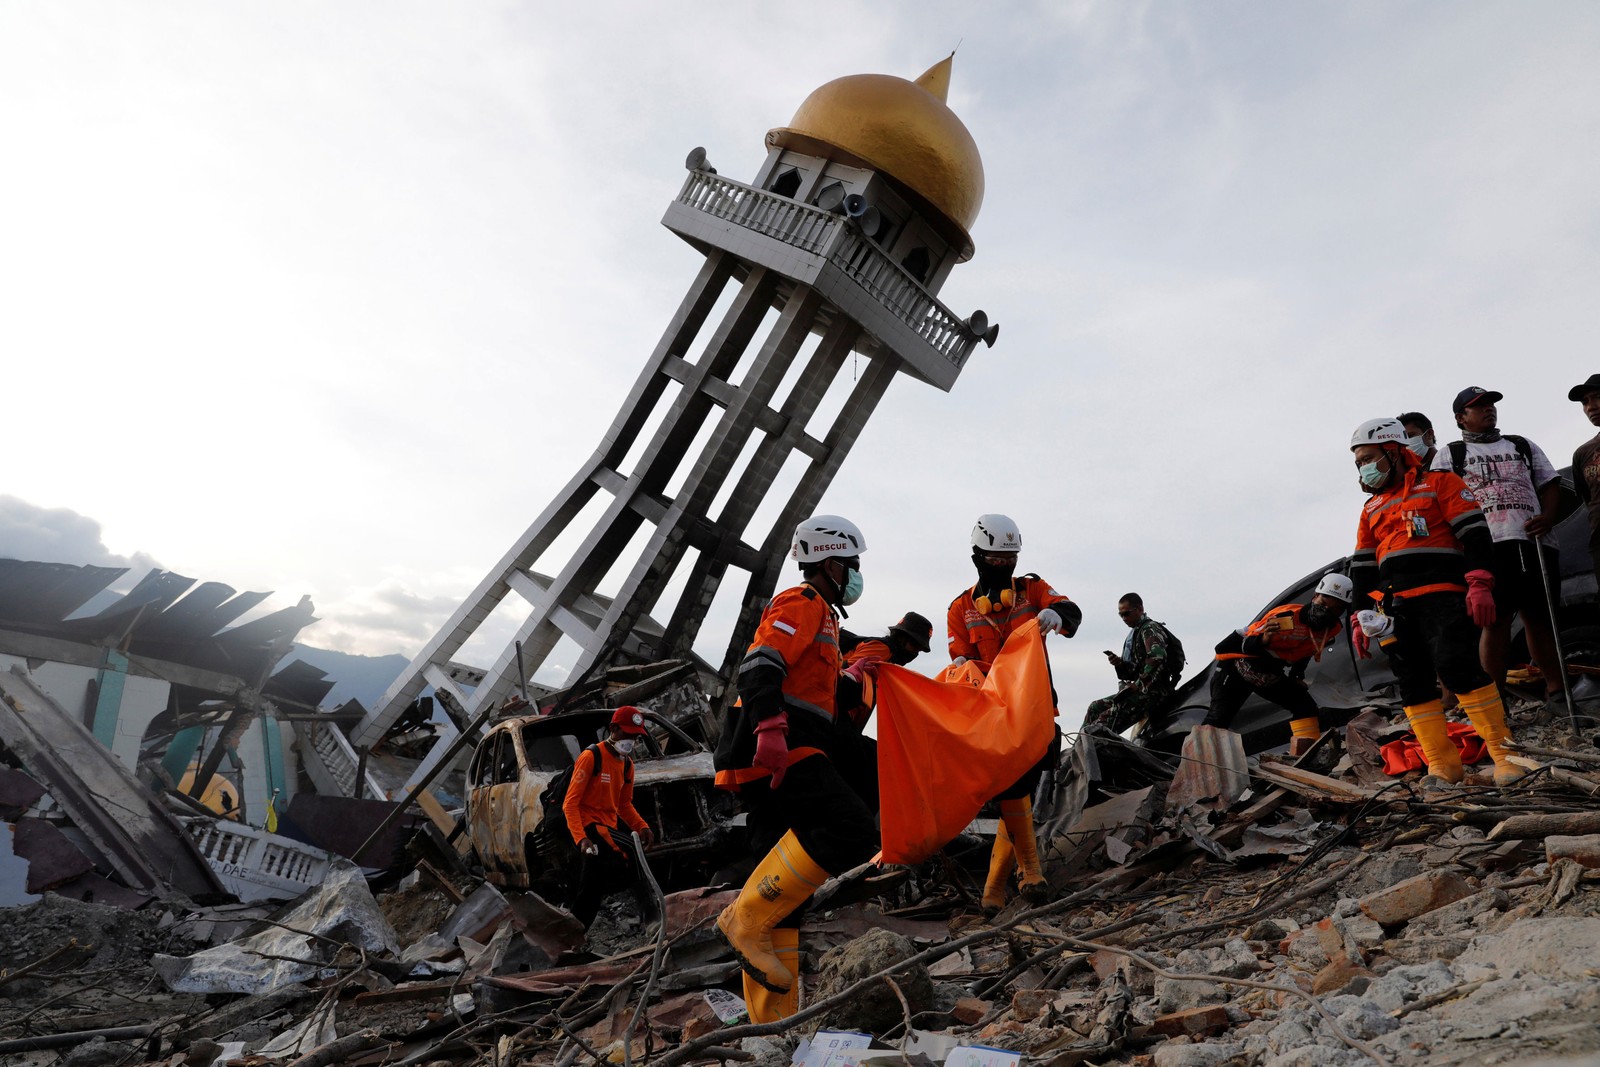 Corpo é retirado dos escombros após terremoto na Indonésia